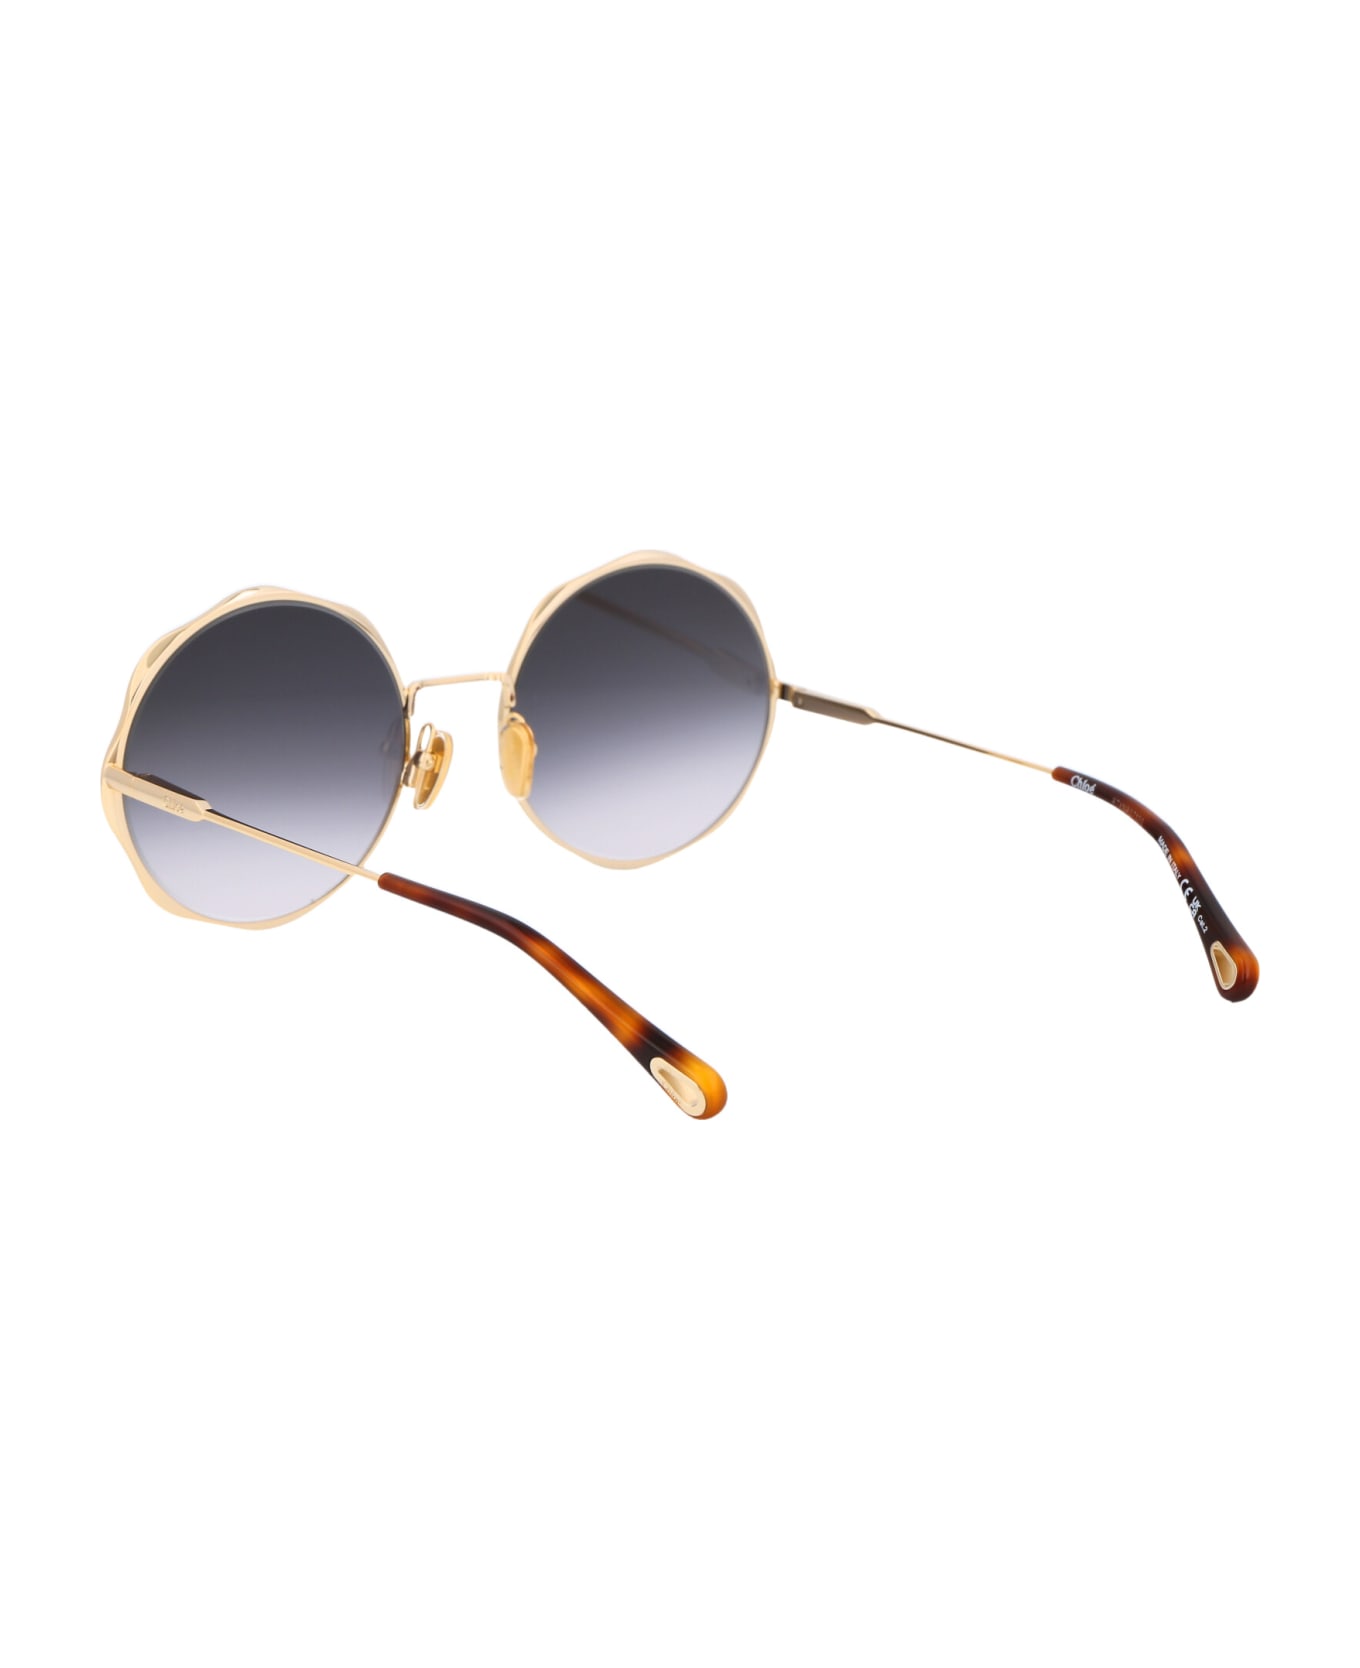 Chloé Eyewear Ch0184s Sunglasses - 001 GOLD GOLD GREY サングラス